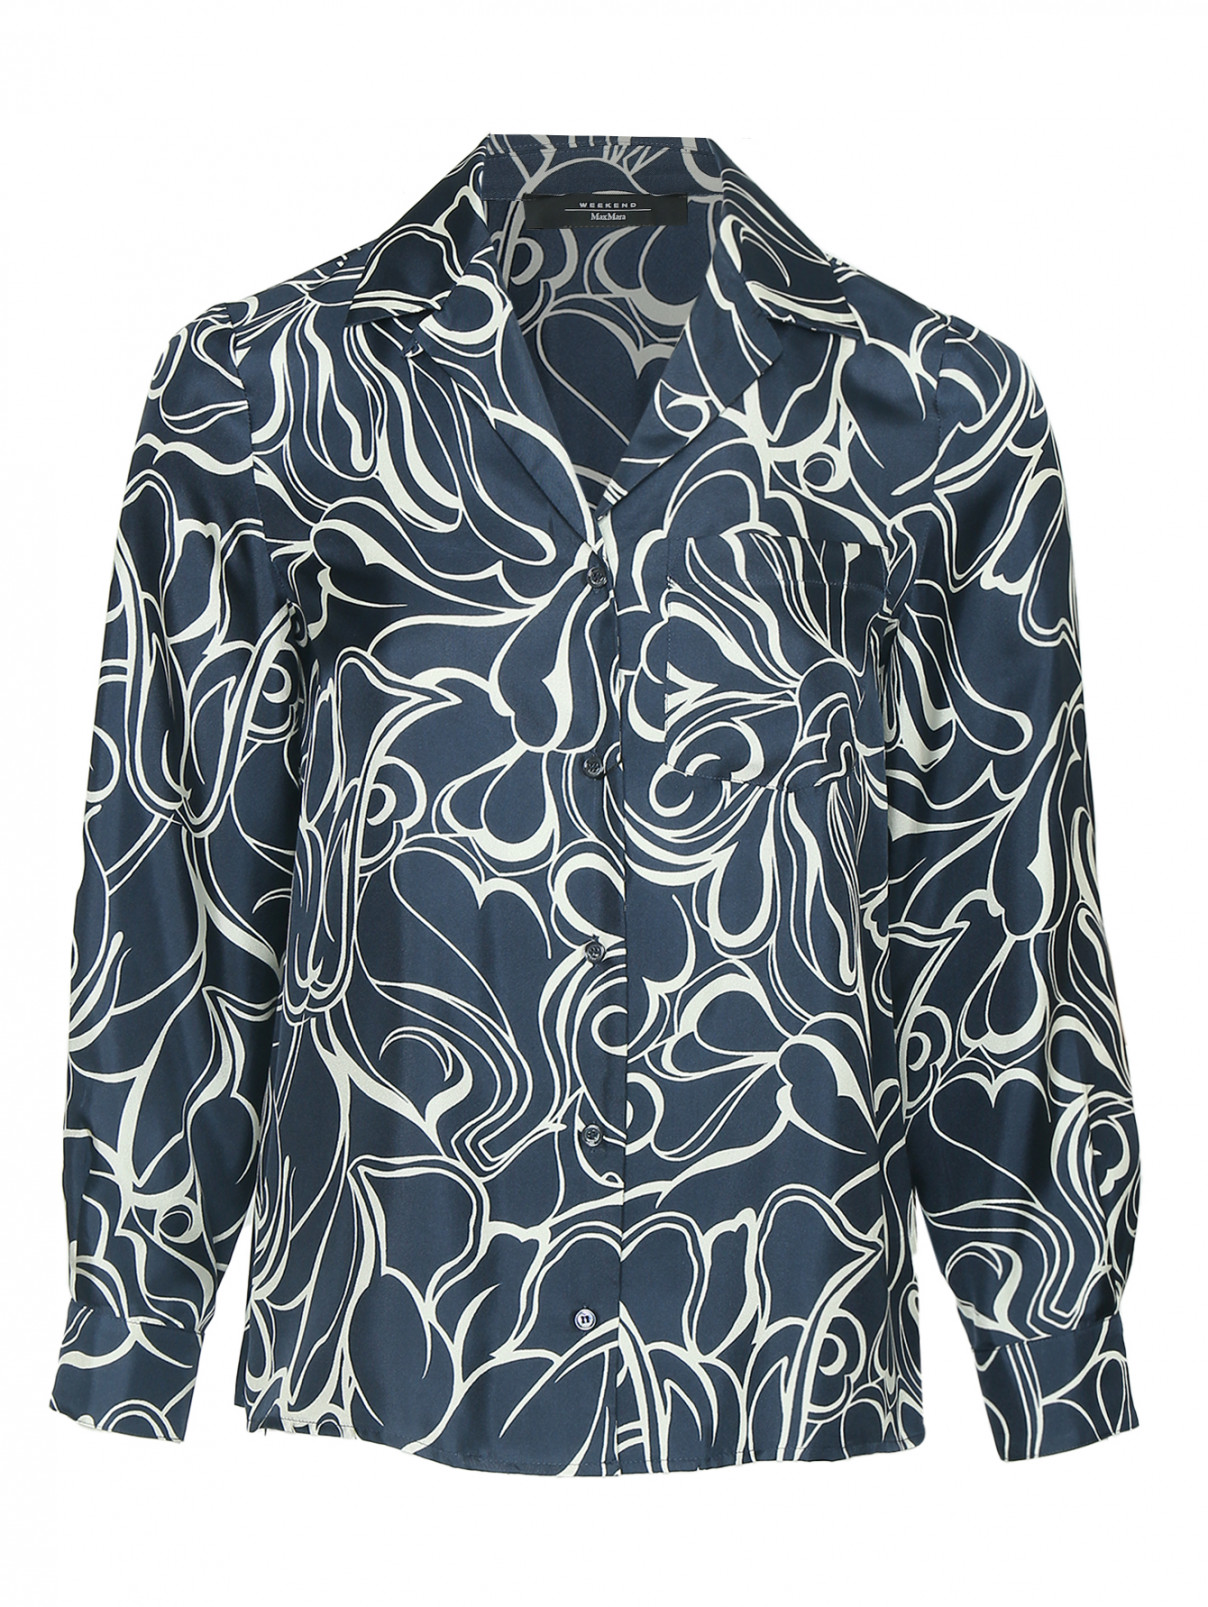 Блуза из шелка с узором Weekend Max Mara  –  Общий вид  – Цвет:  Синий